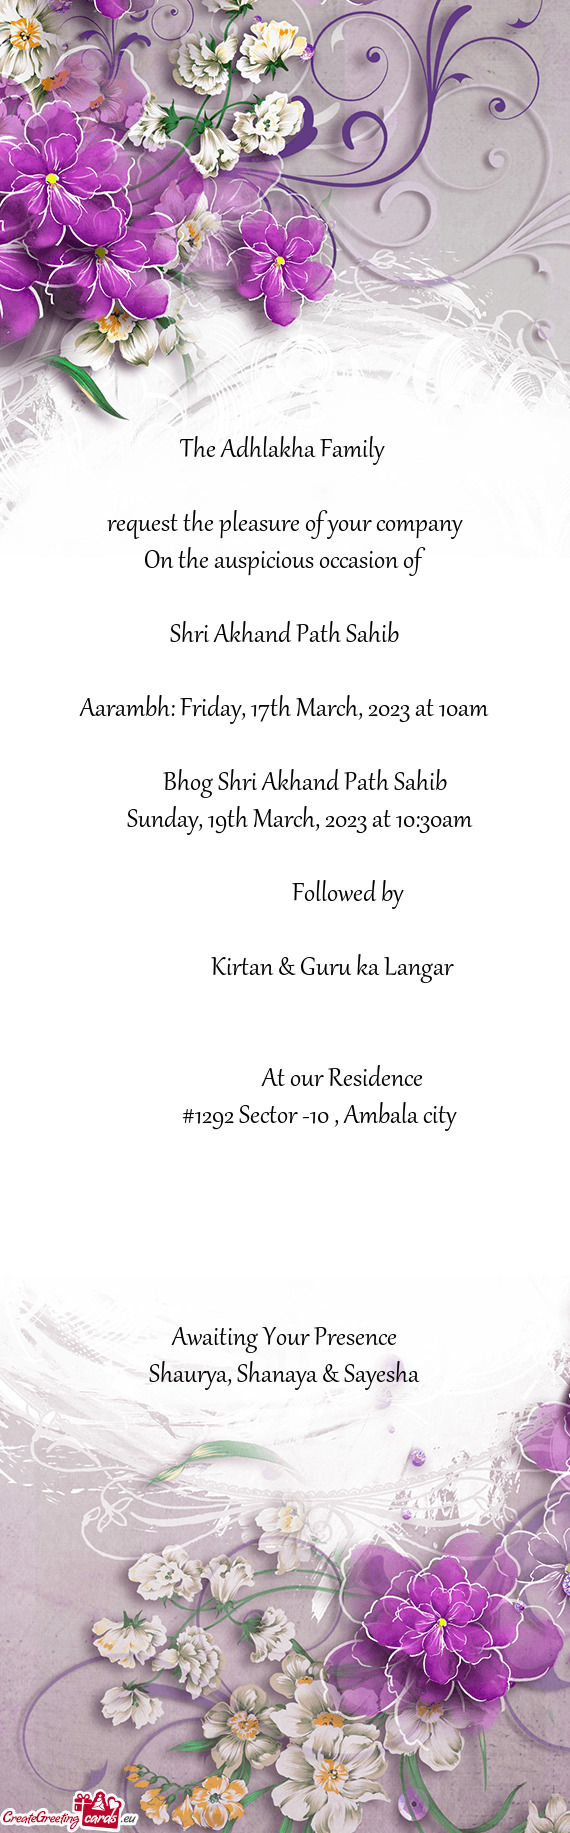 Aarambh: Friday, 17th March, 2023 at 10am